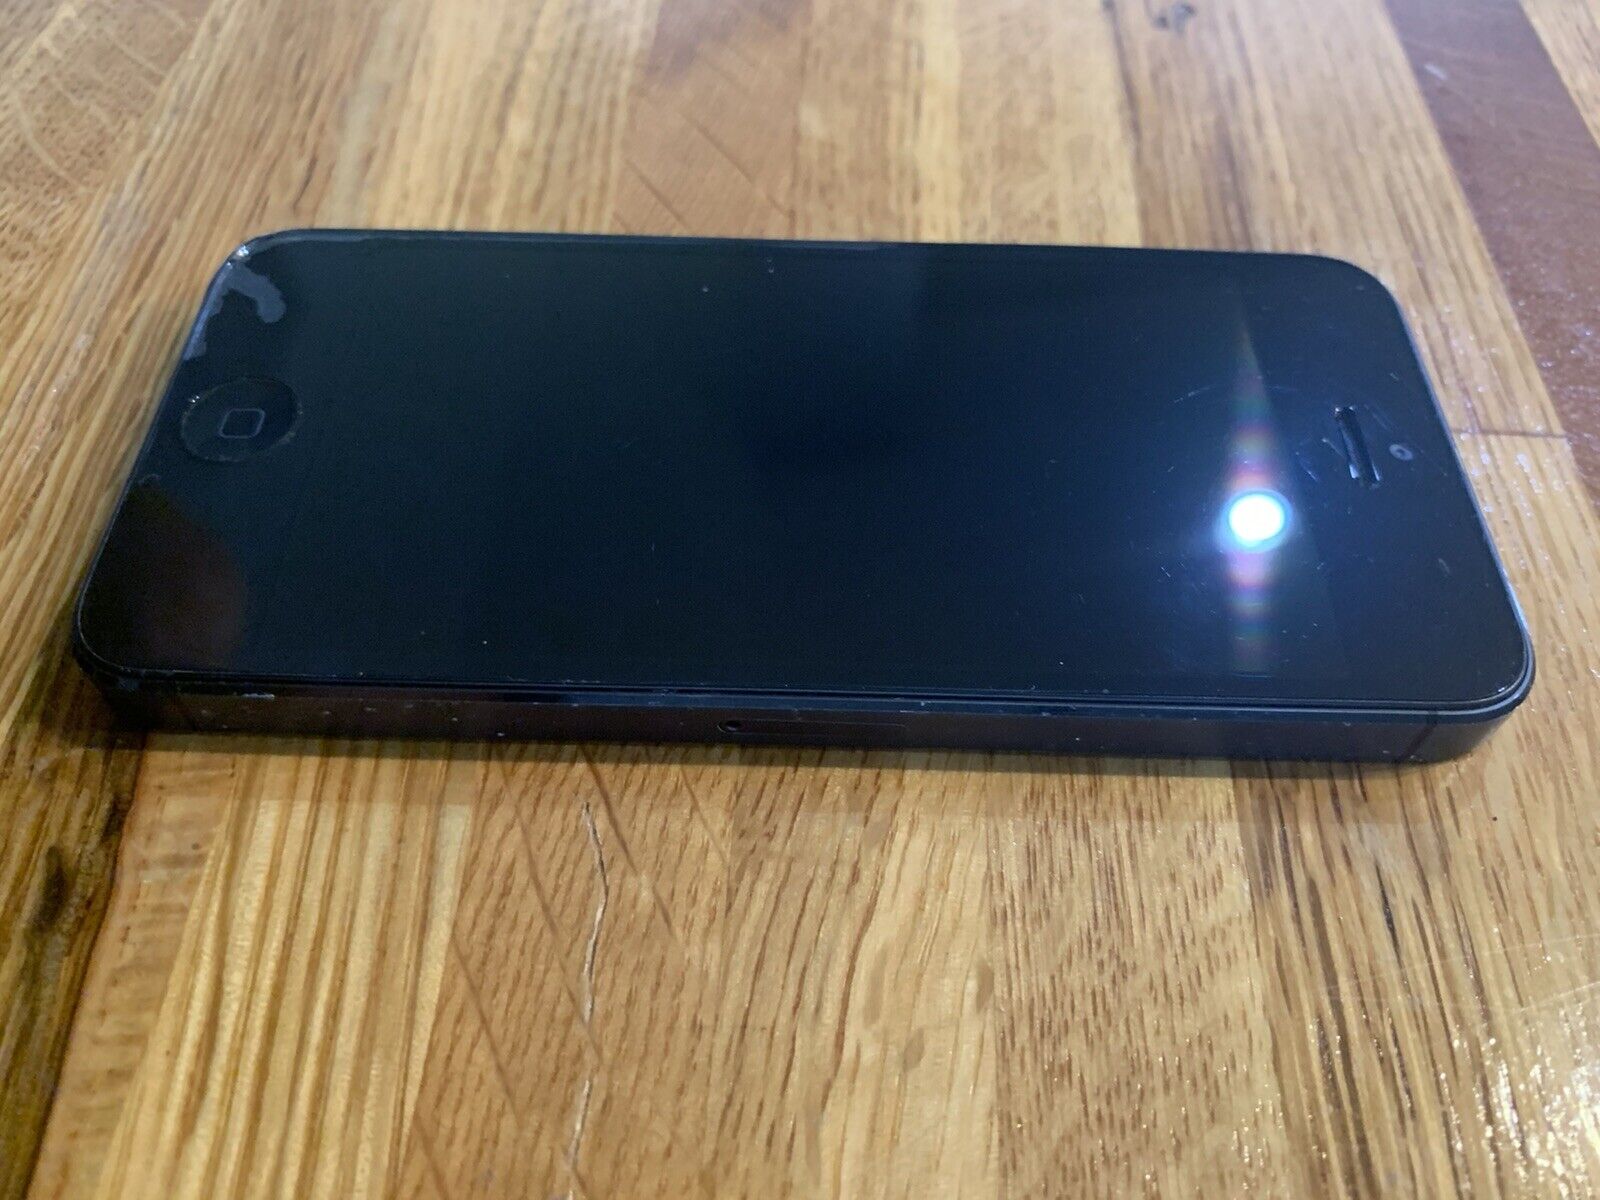 Apple iPhone 5 - 16GB - Black & Slate (Unlocked) A1428 (GSM)